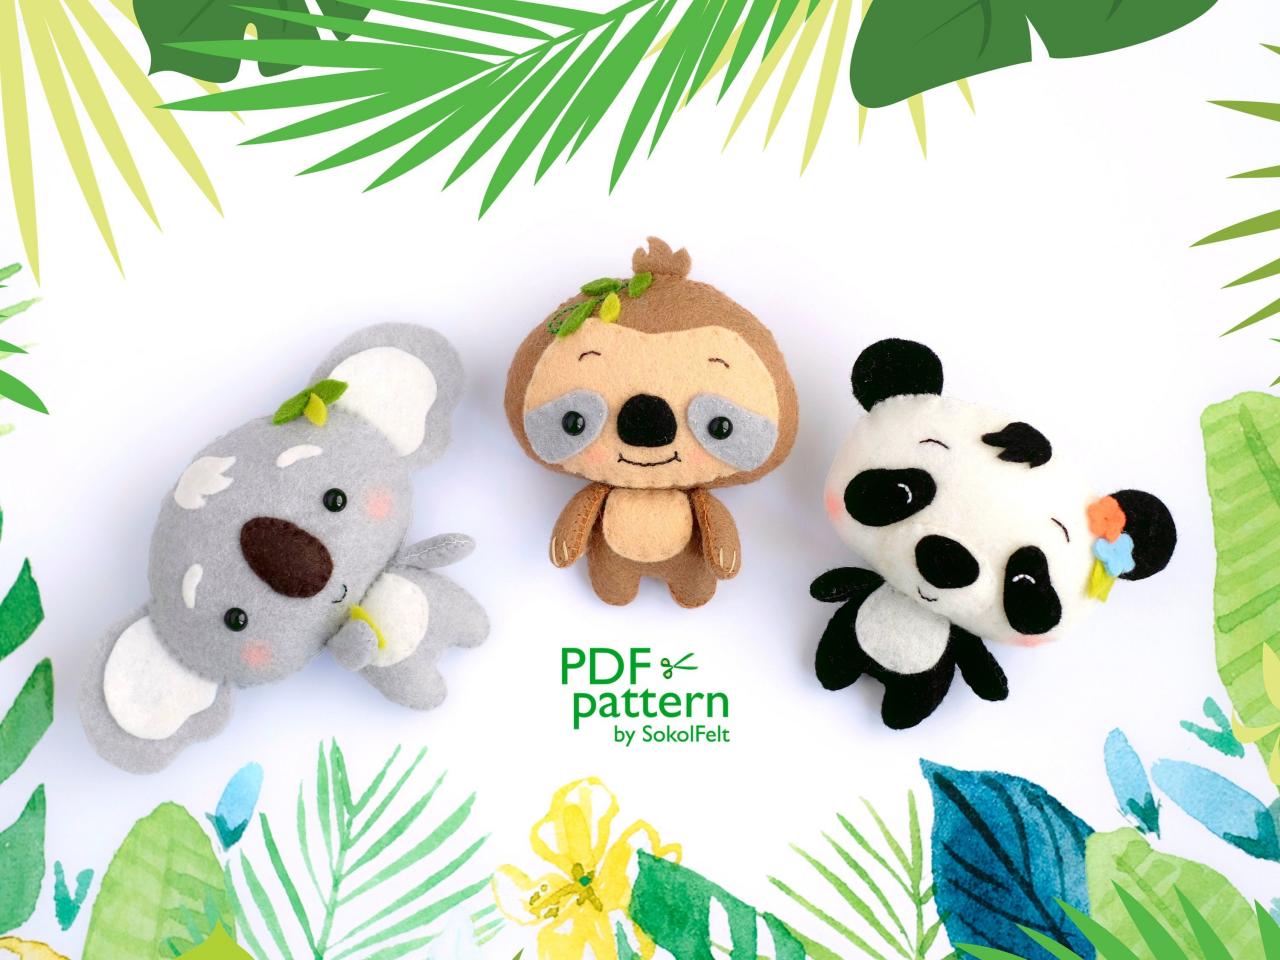 Set of 3 cute baby animal toy PDF and SVG patterns, Felt Koala, Sloth and Panda, Woodland animal plush toy, baby crib mobile toy